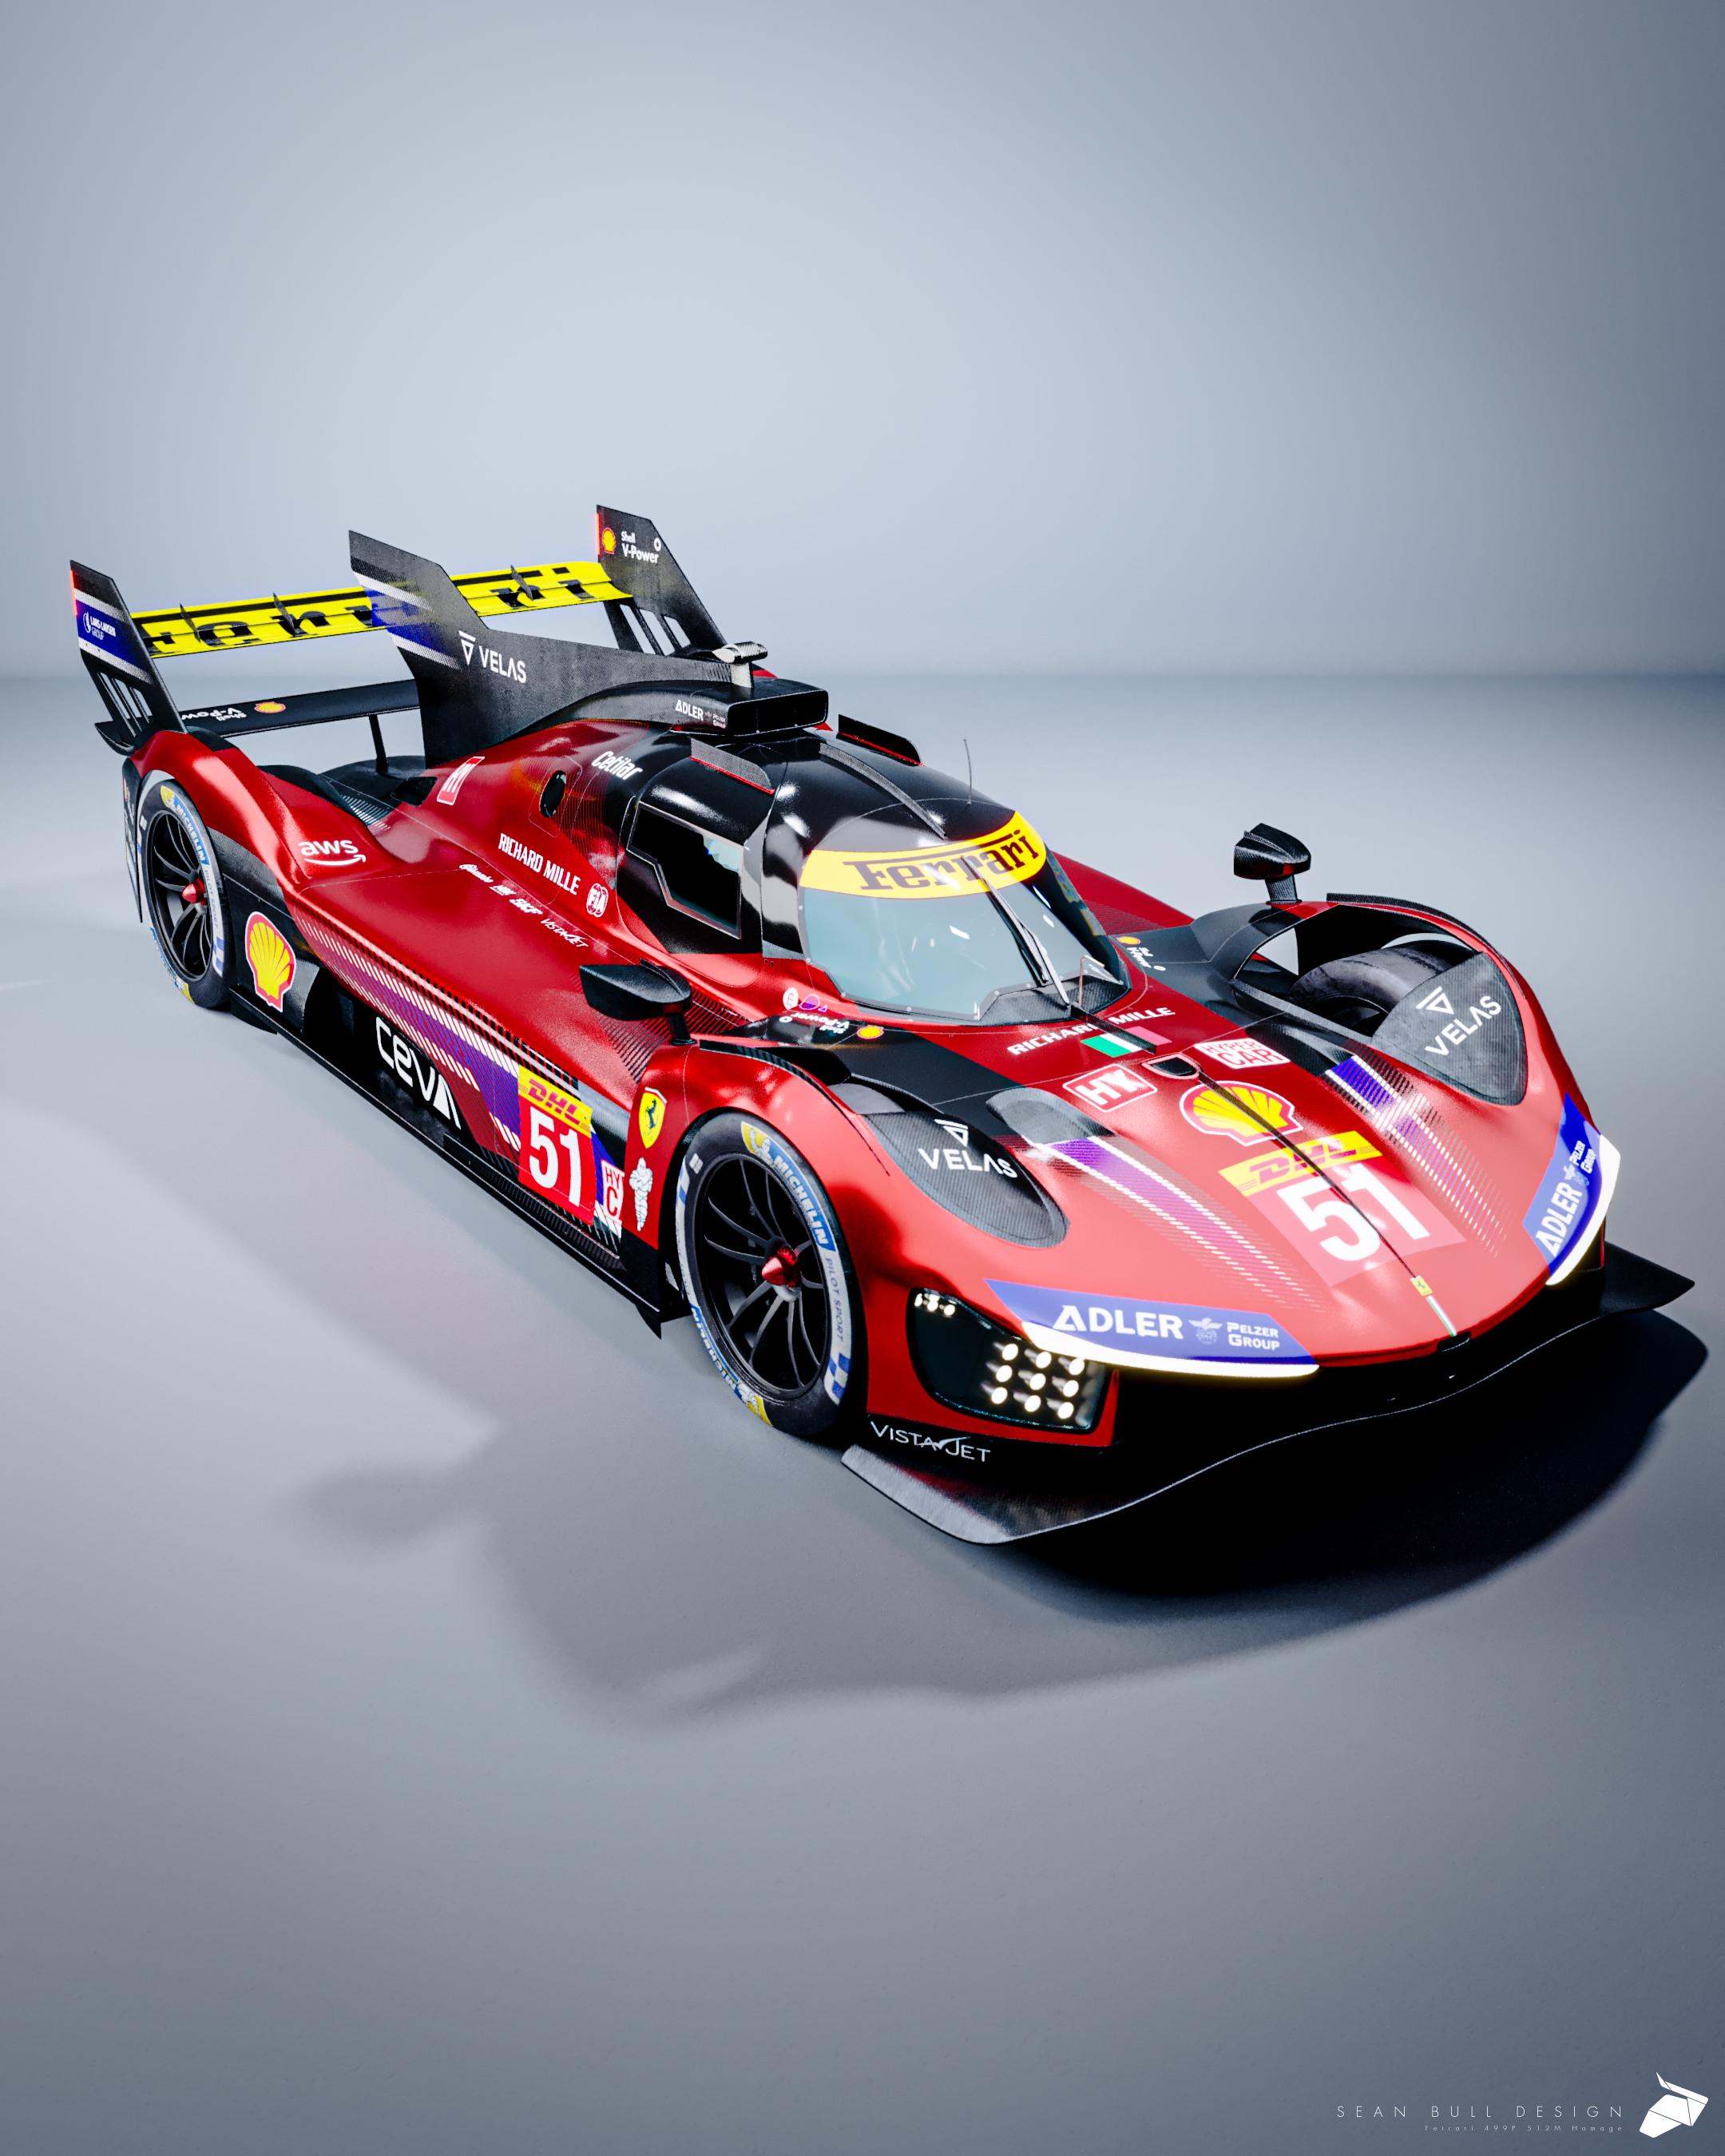 Sean Bull Design On Ferrari 499p Lmh Livery Concept